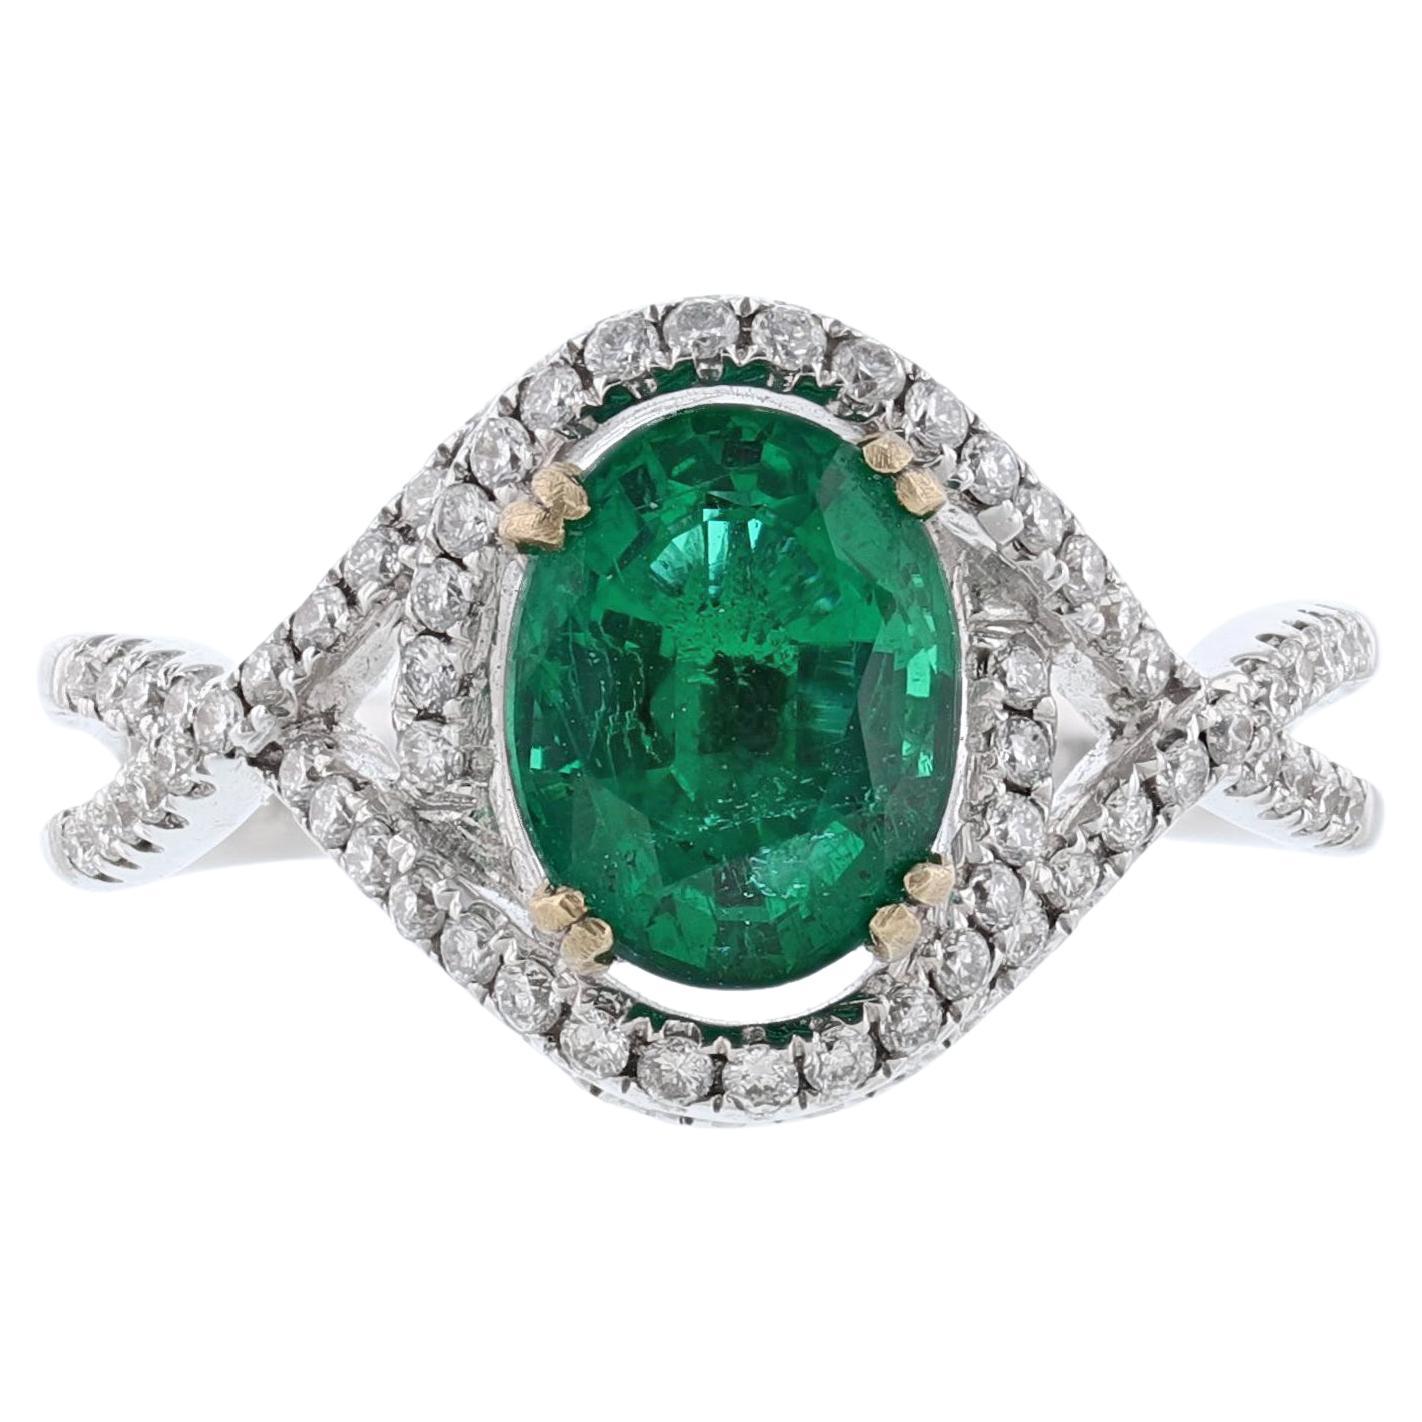 14K White Gold Round Twist Diamond Emerald 2.10 Carat Ring